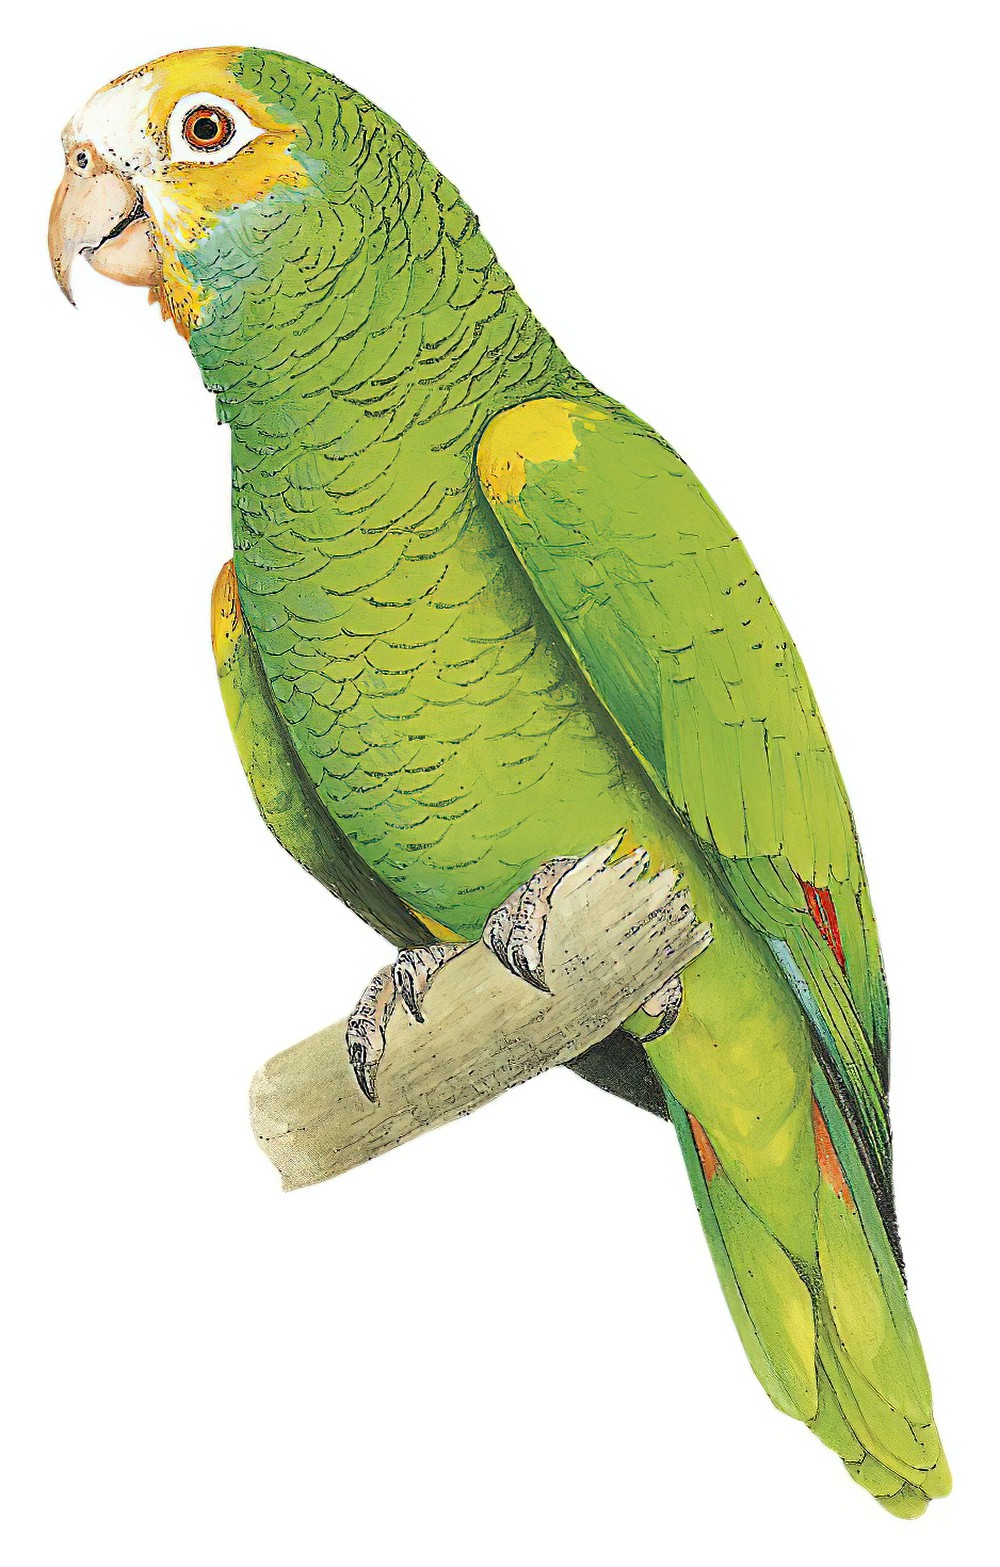 Yellow-shouldered Parrot / Amazona barbadensis